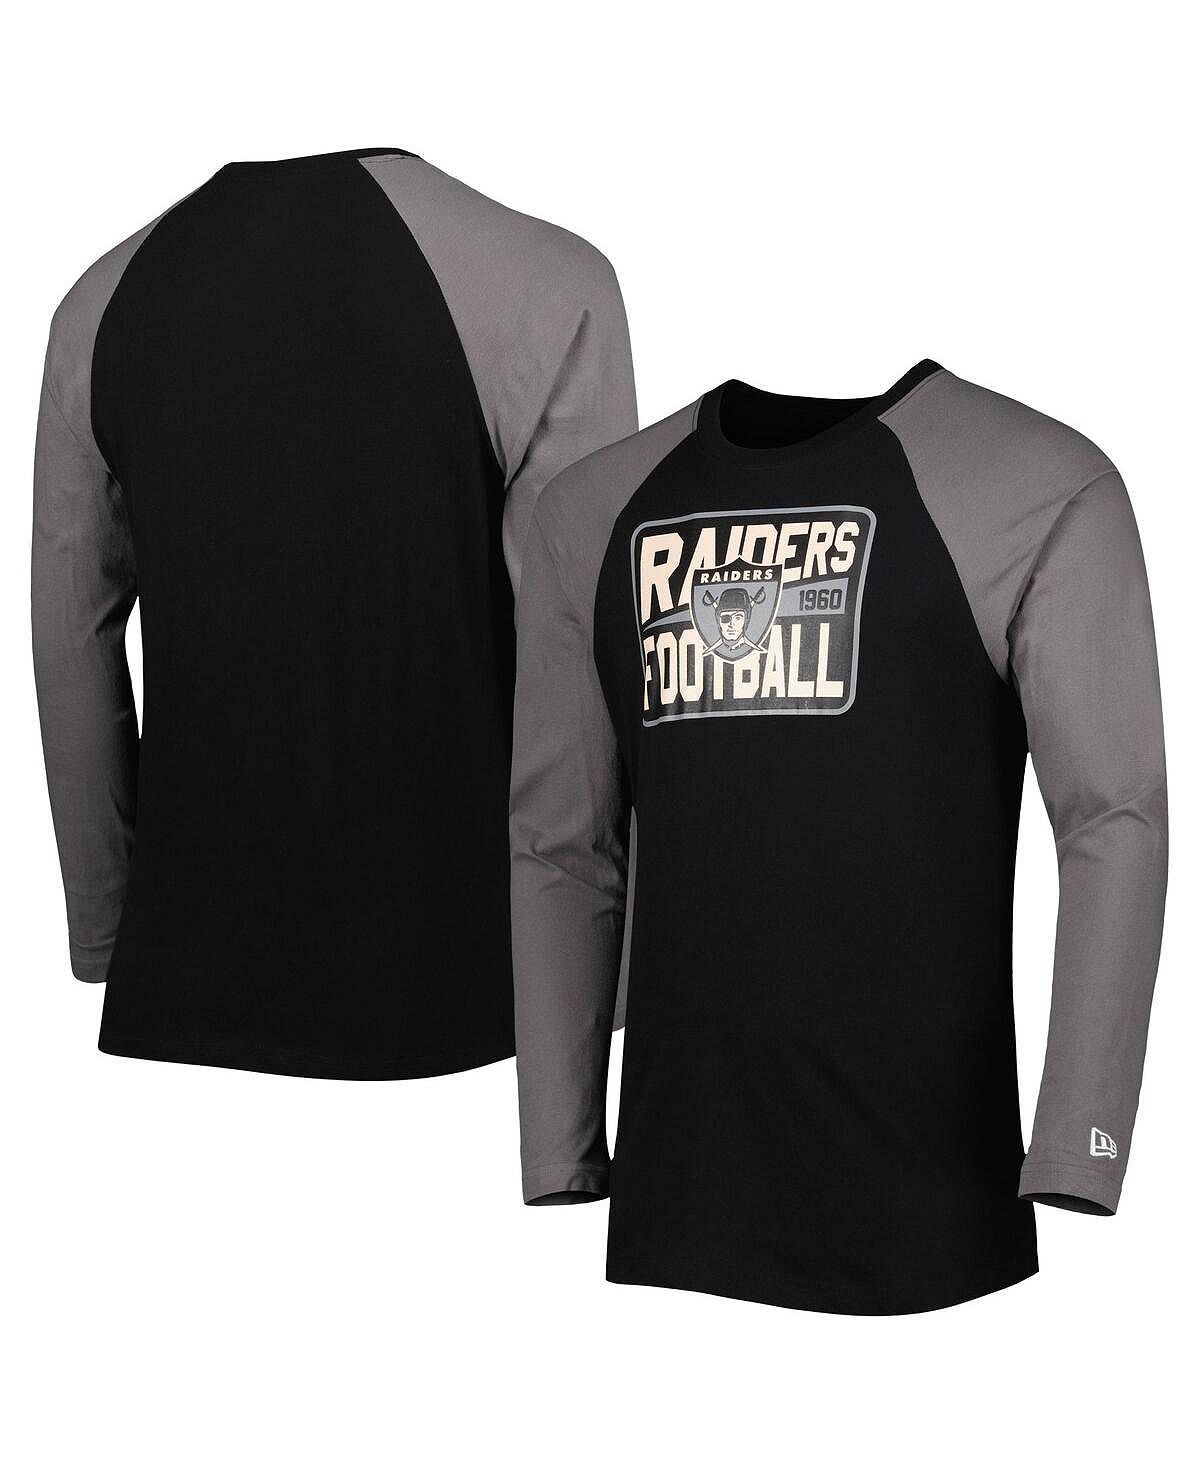 мужская черная футболка las vegas raiders throwback junk food черный Мужская черная футболка с длинным рукавом Las Vegas Raiders Throwback реглан New Era